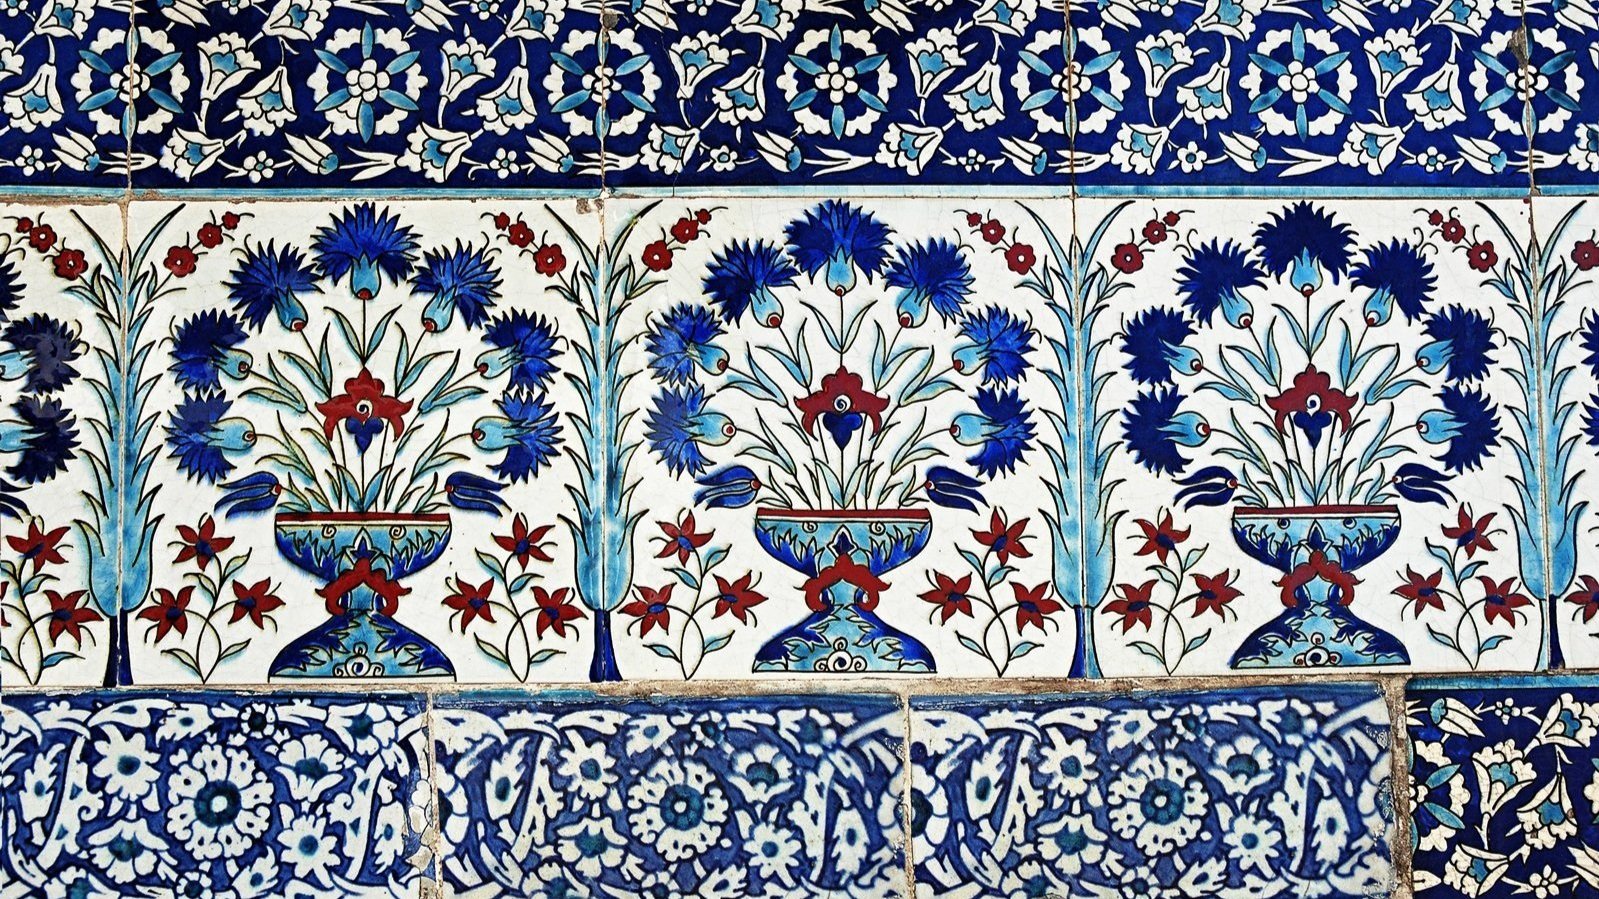 Detail of Iznik tiles in Topkapi Palace harem